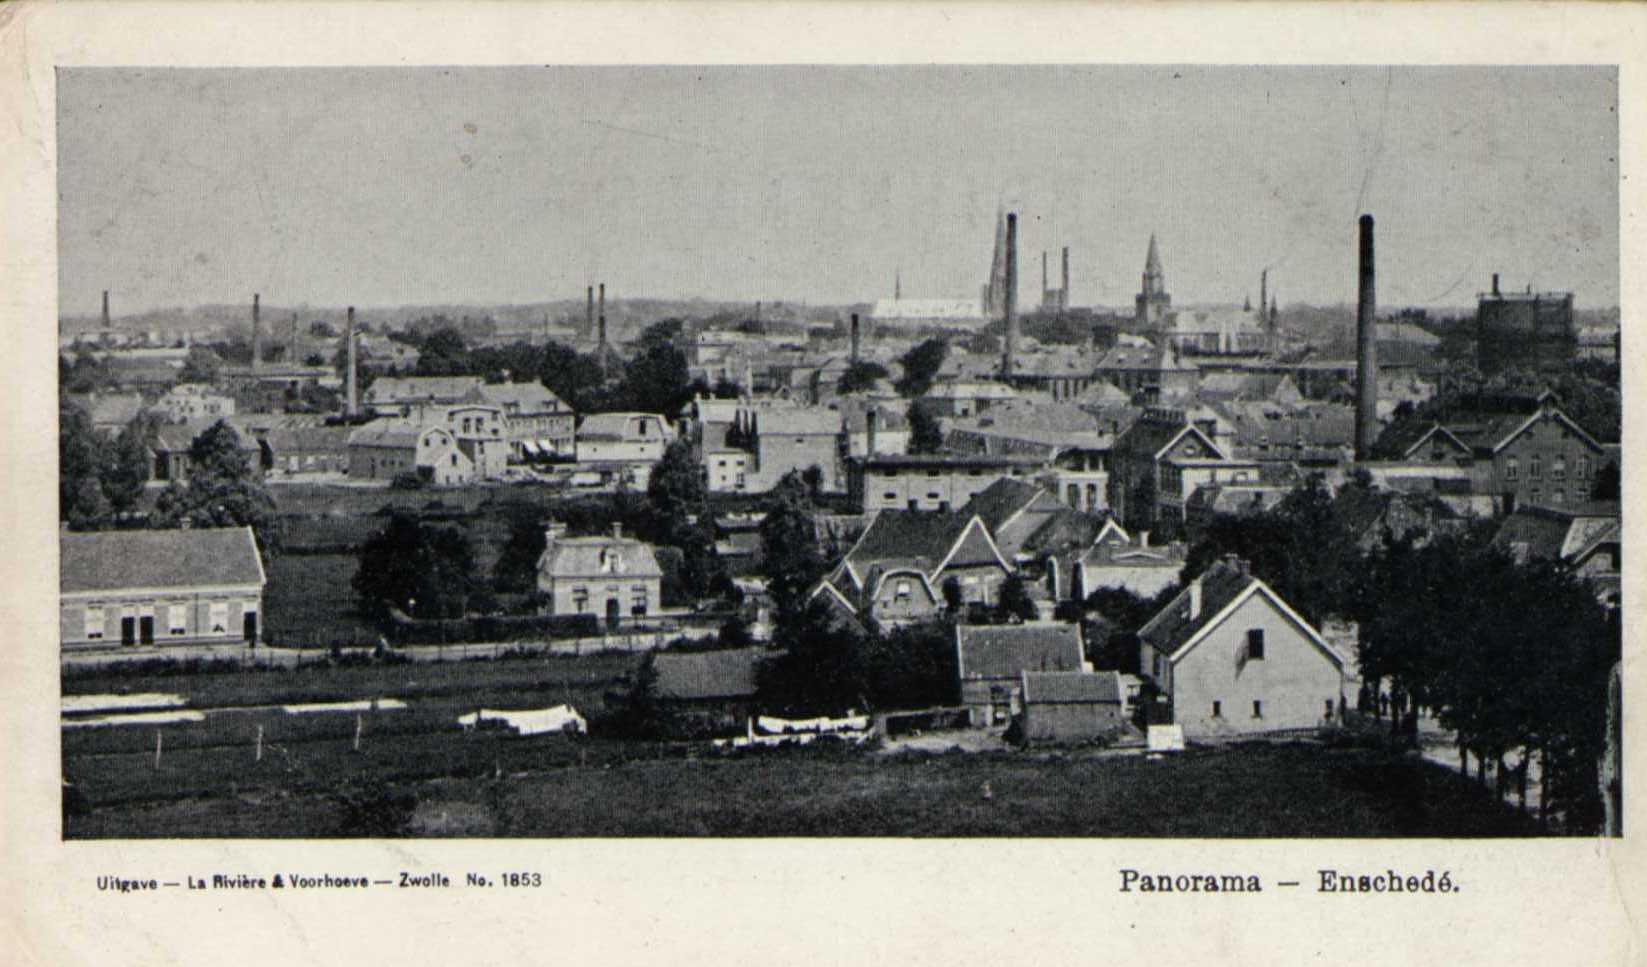 Panorama-enschede-2.jpg